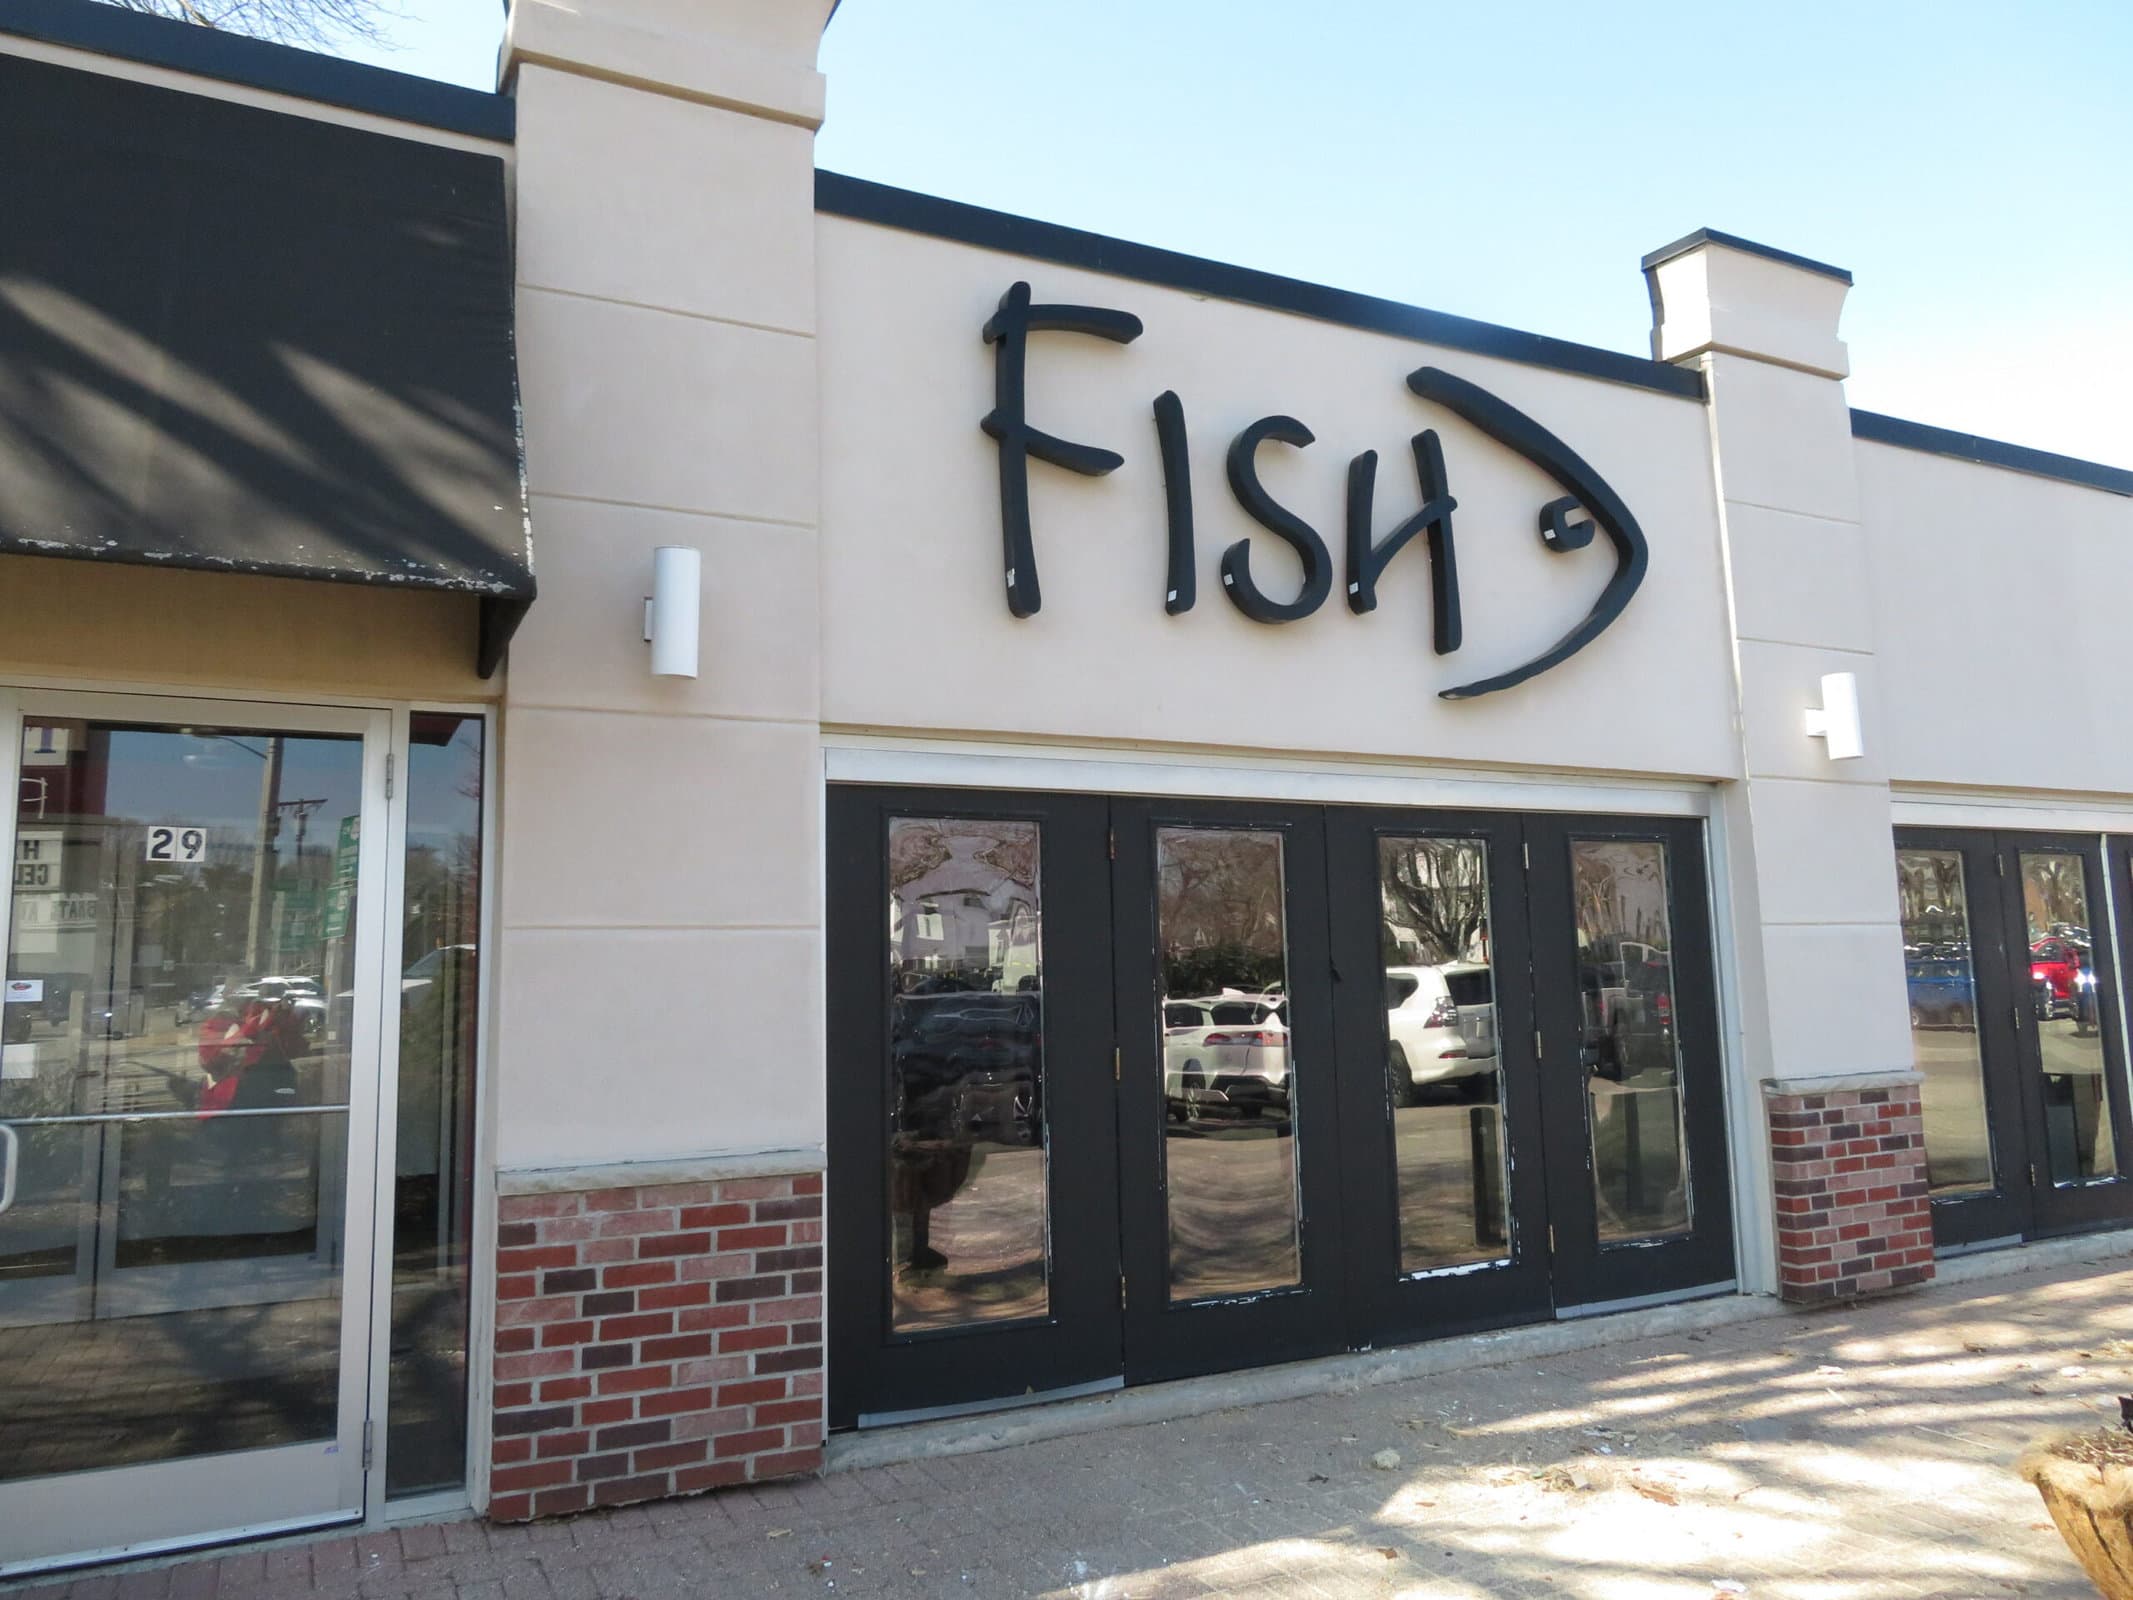 Fish Restaurant and Wine Bar in Marlborough closes